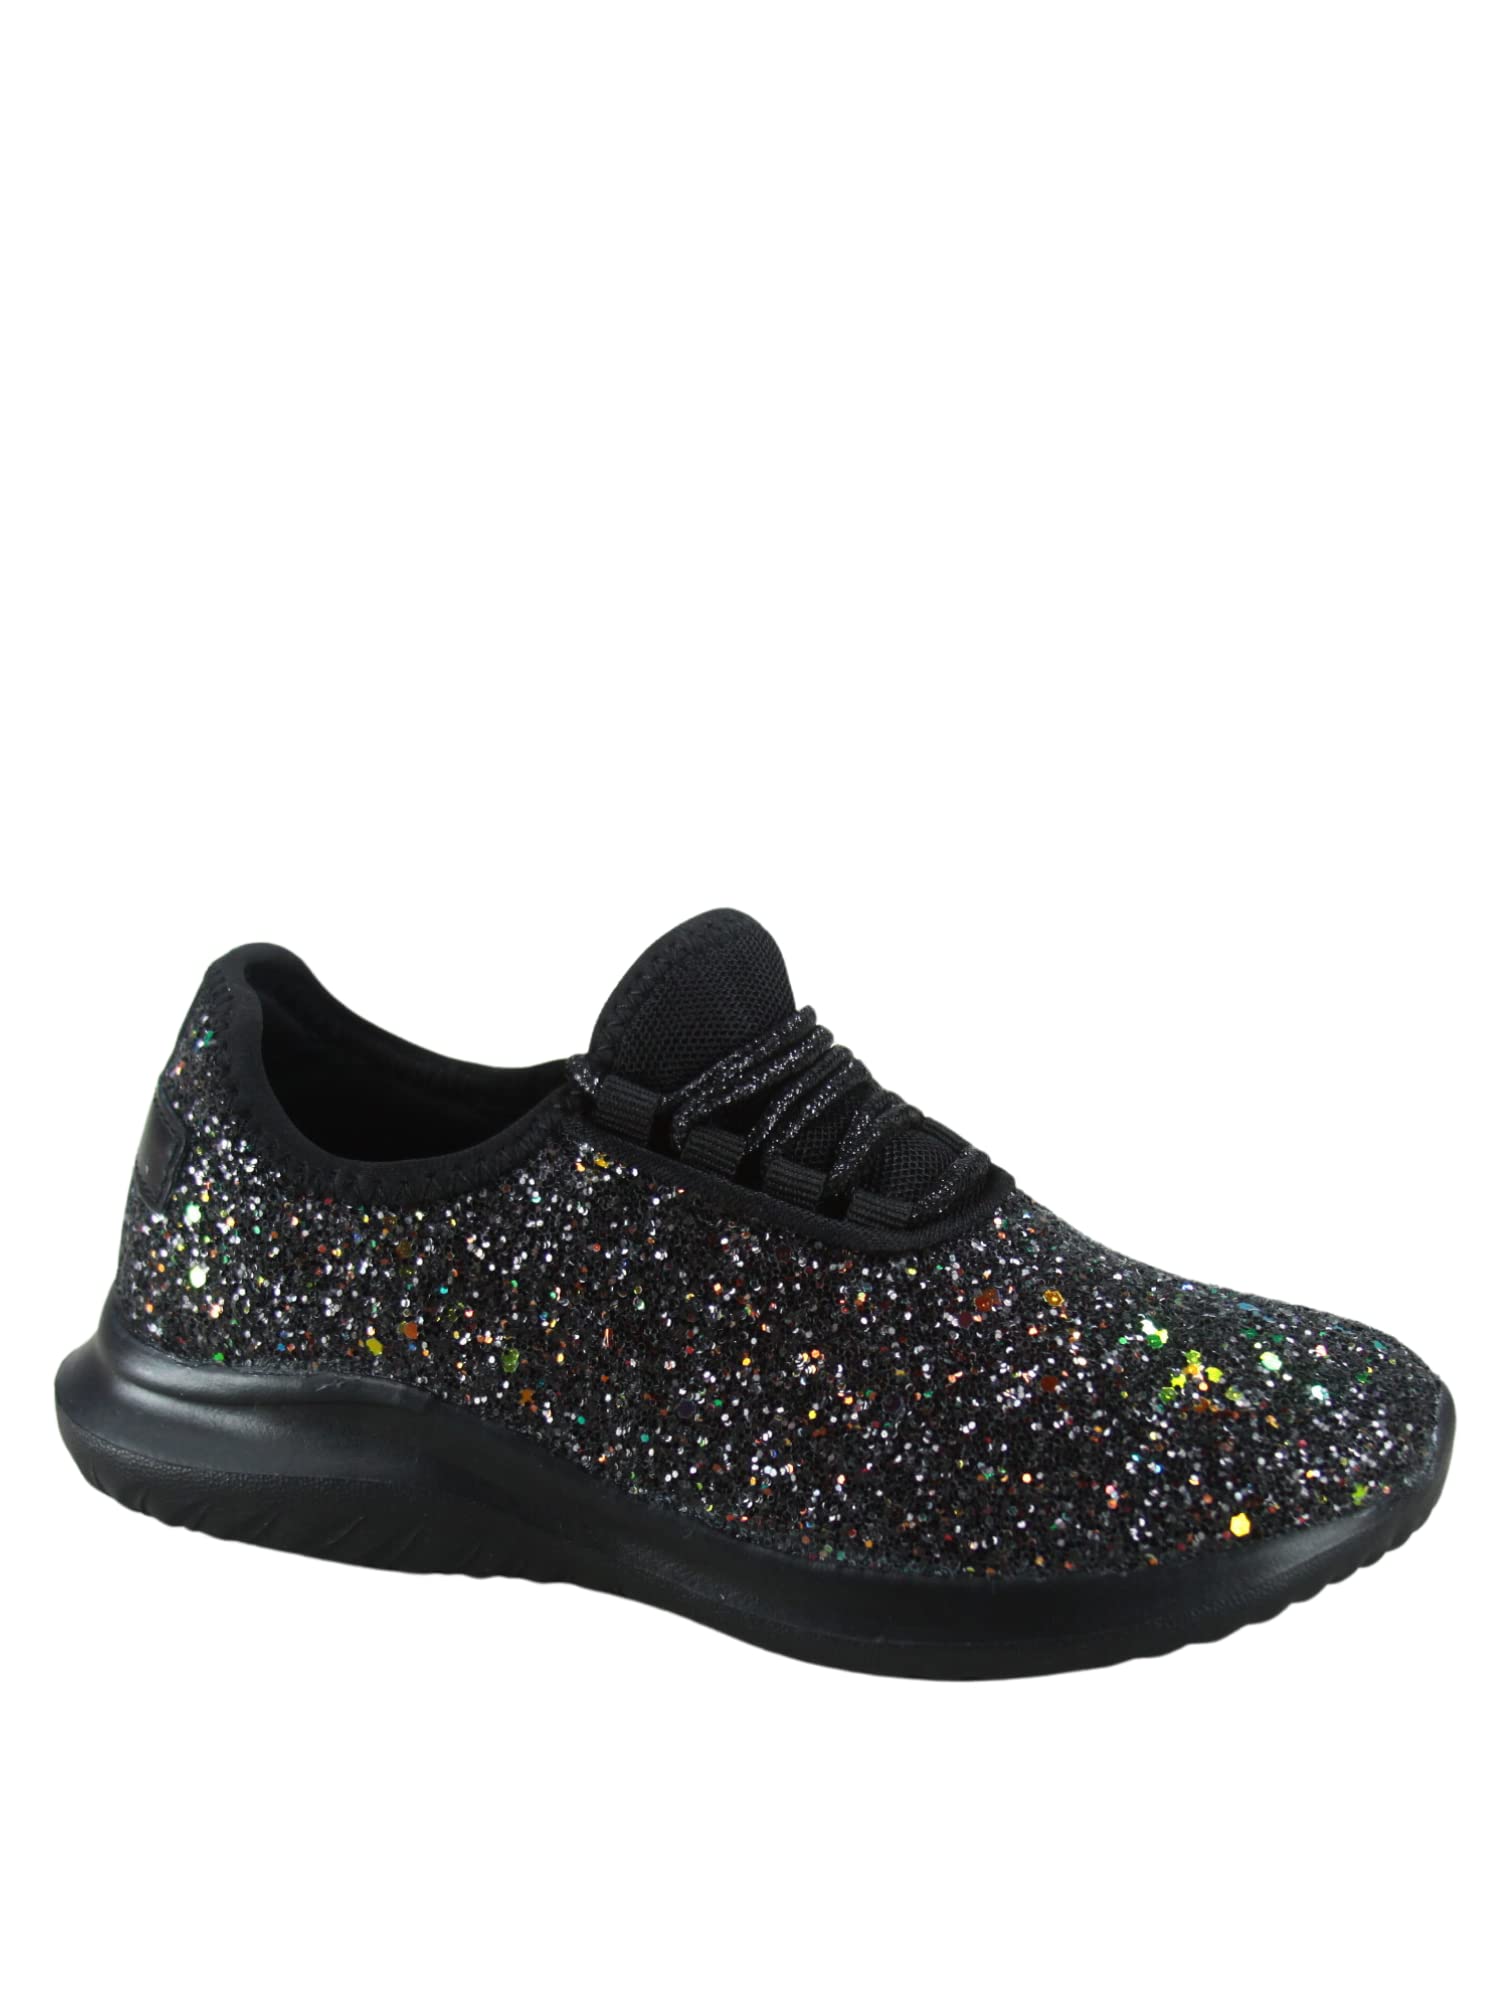 TZ Kid's Girl's Fashion Glitter Sparkle Slip On Lace Casual Walking Sneaker Shoes